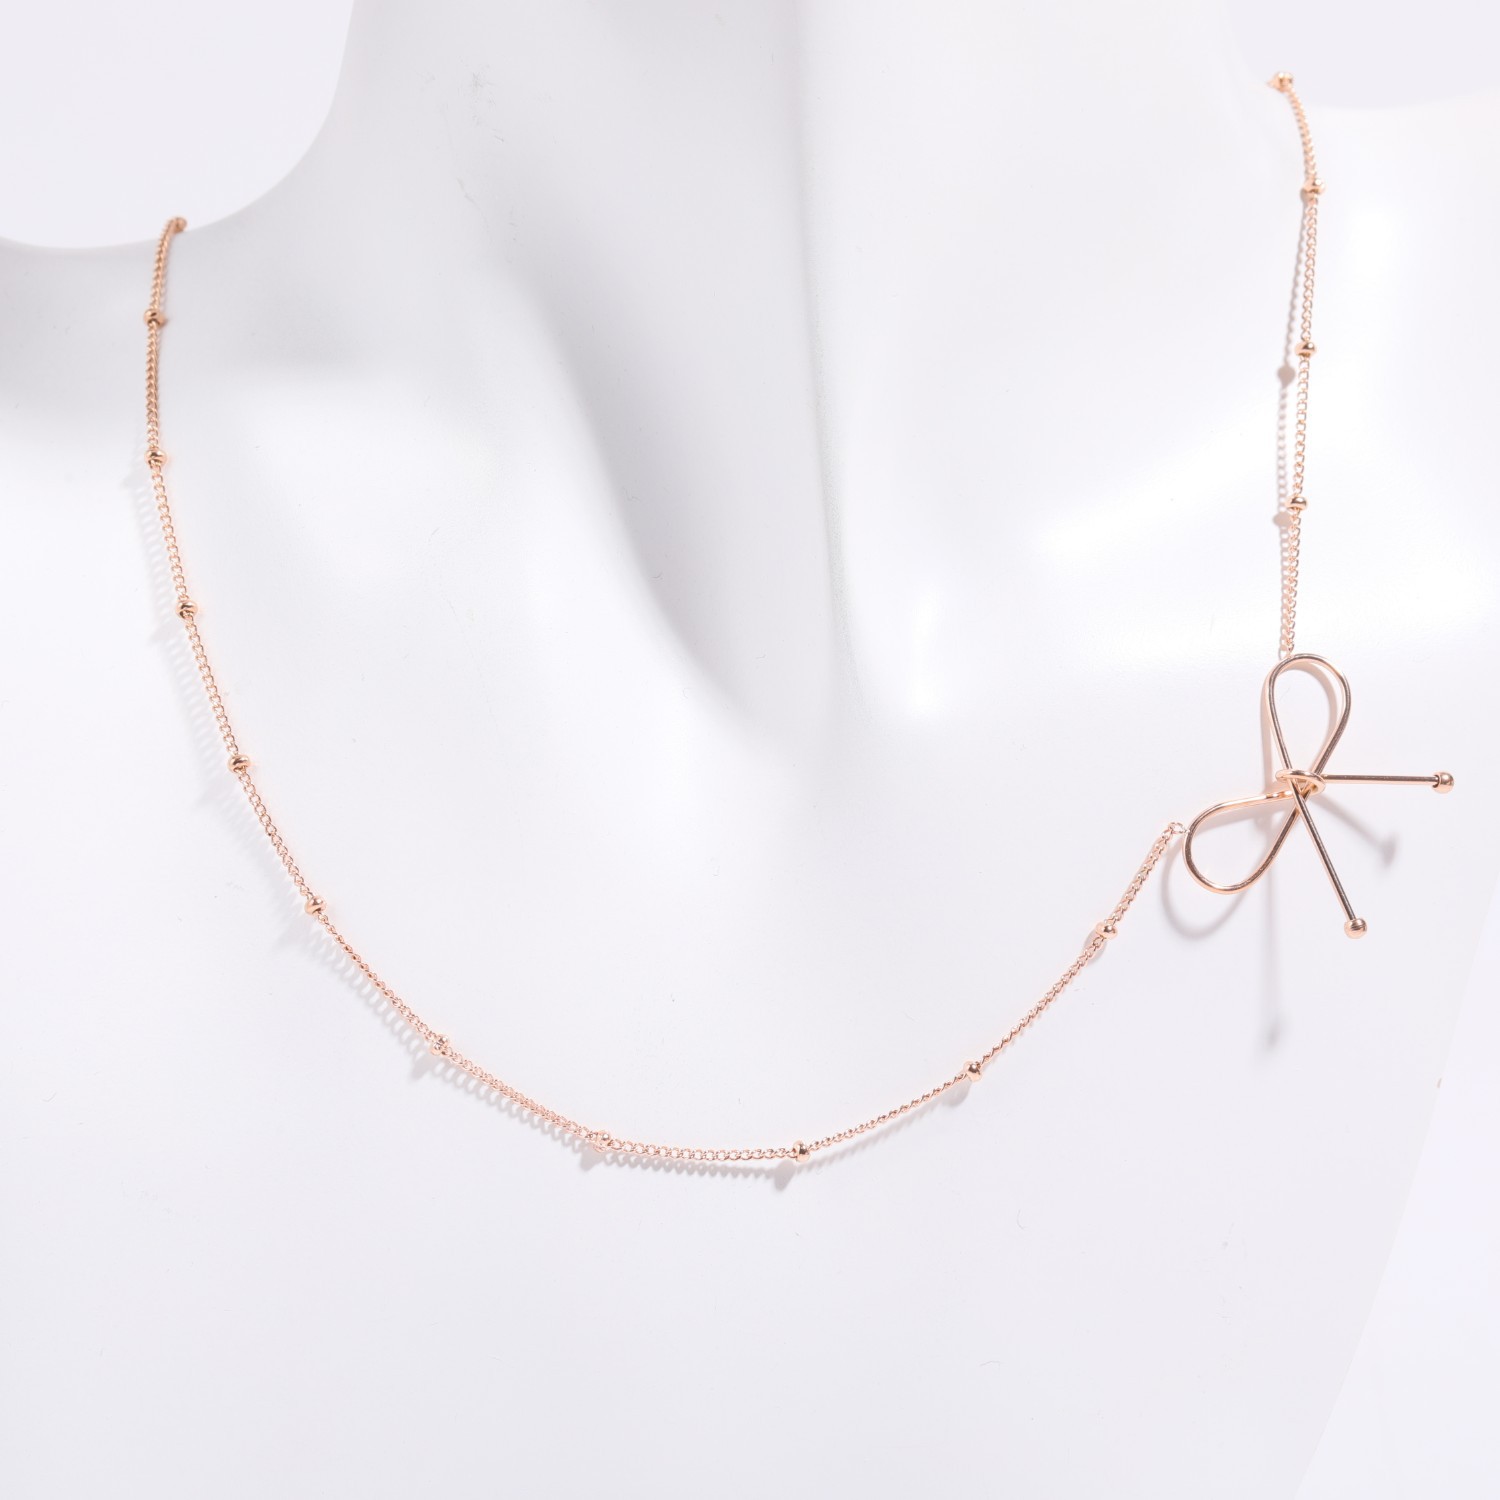 3:Rose gold necklace 35x5cm